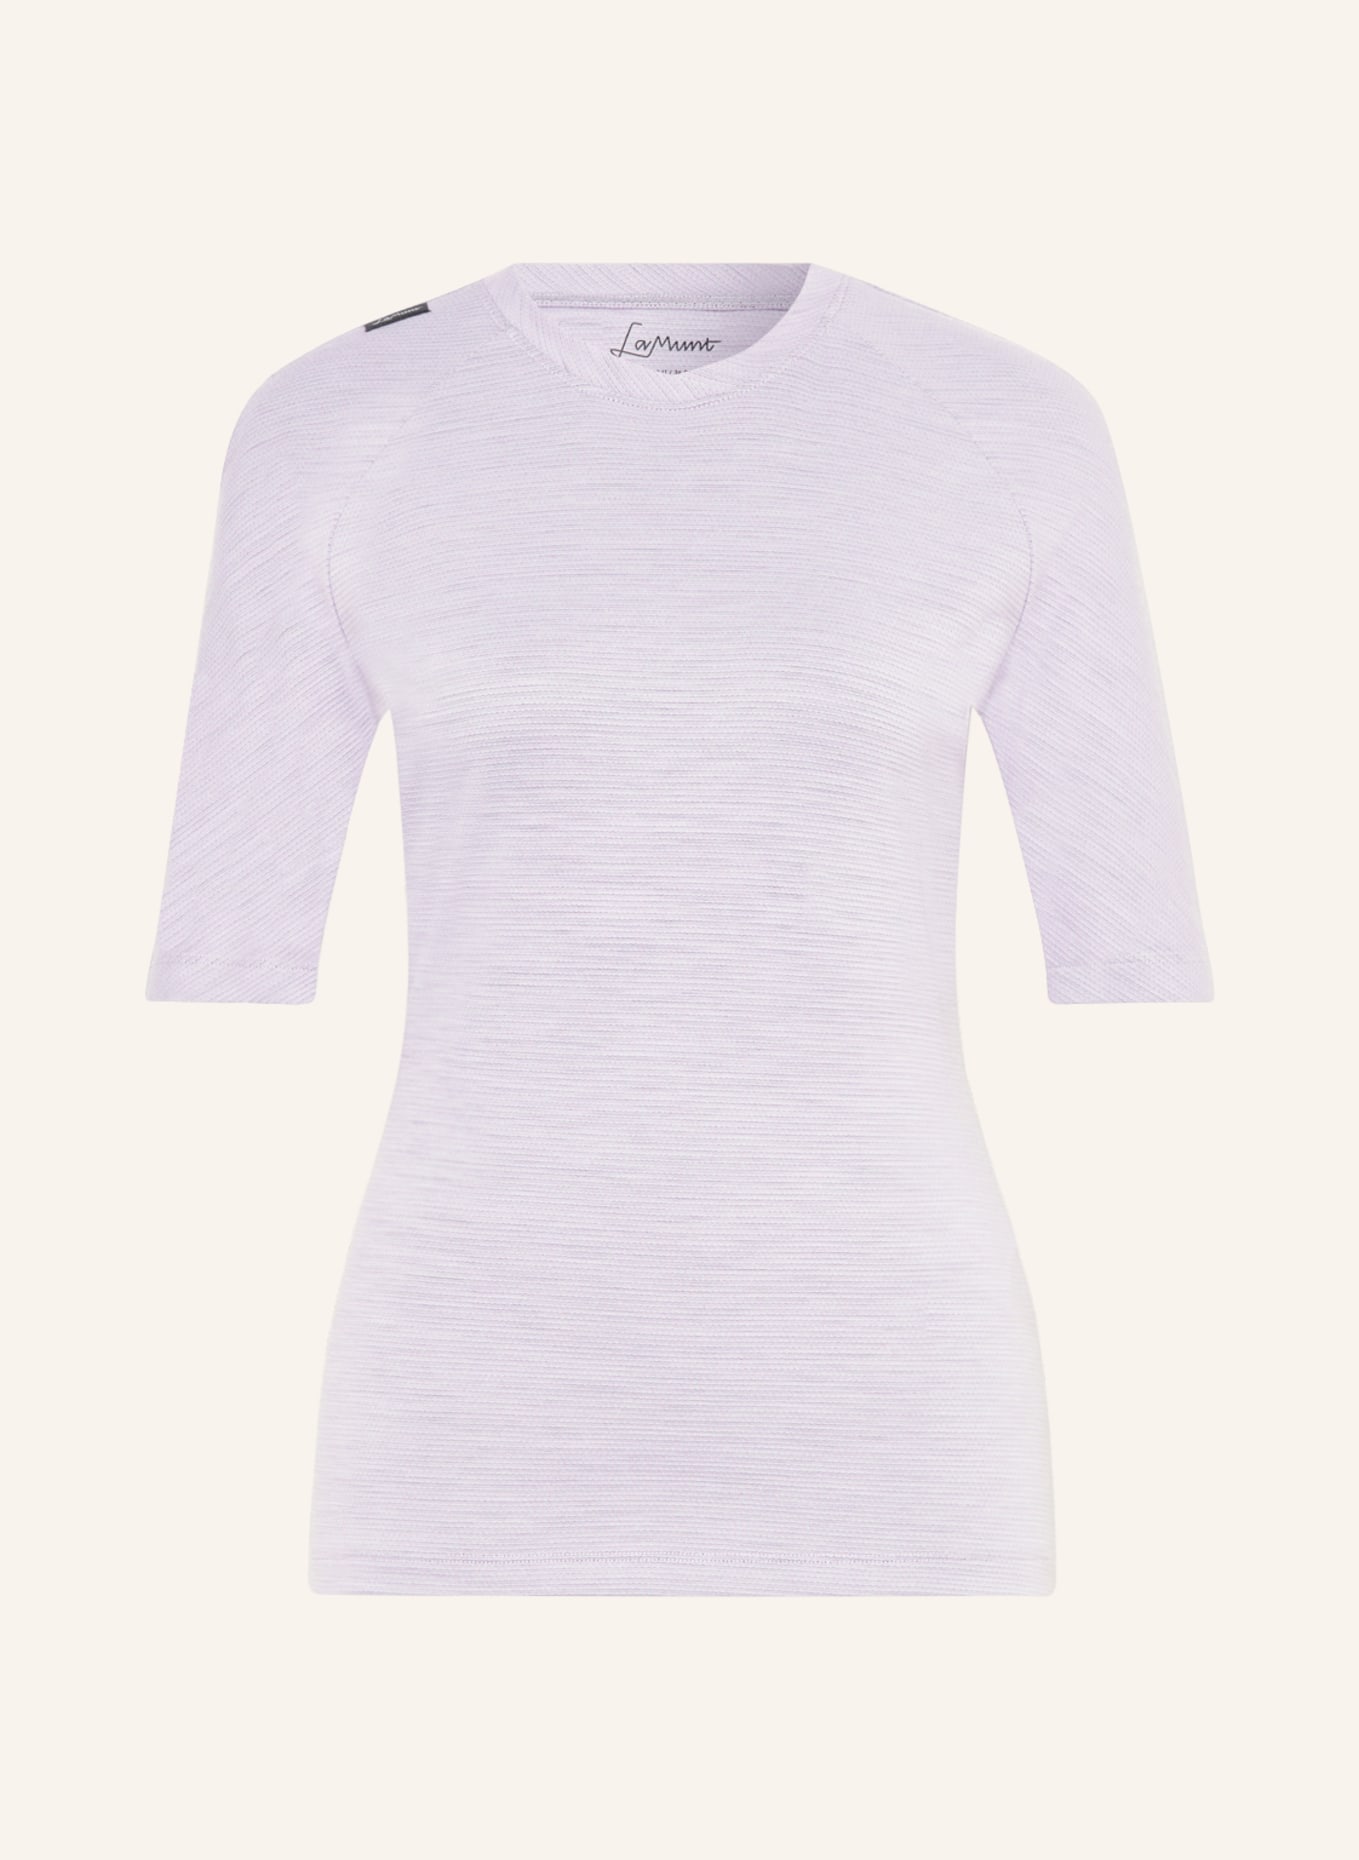 LaMunt T-shirt MARTINE with merino wool, Color: LIGHT PURPLE (Image 1)